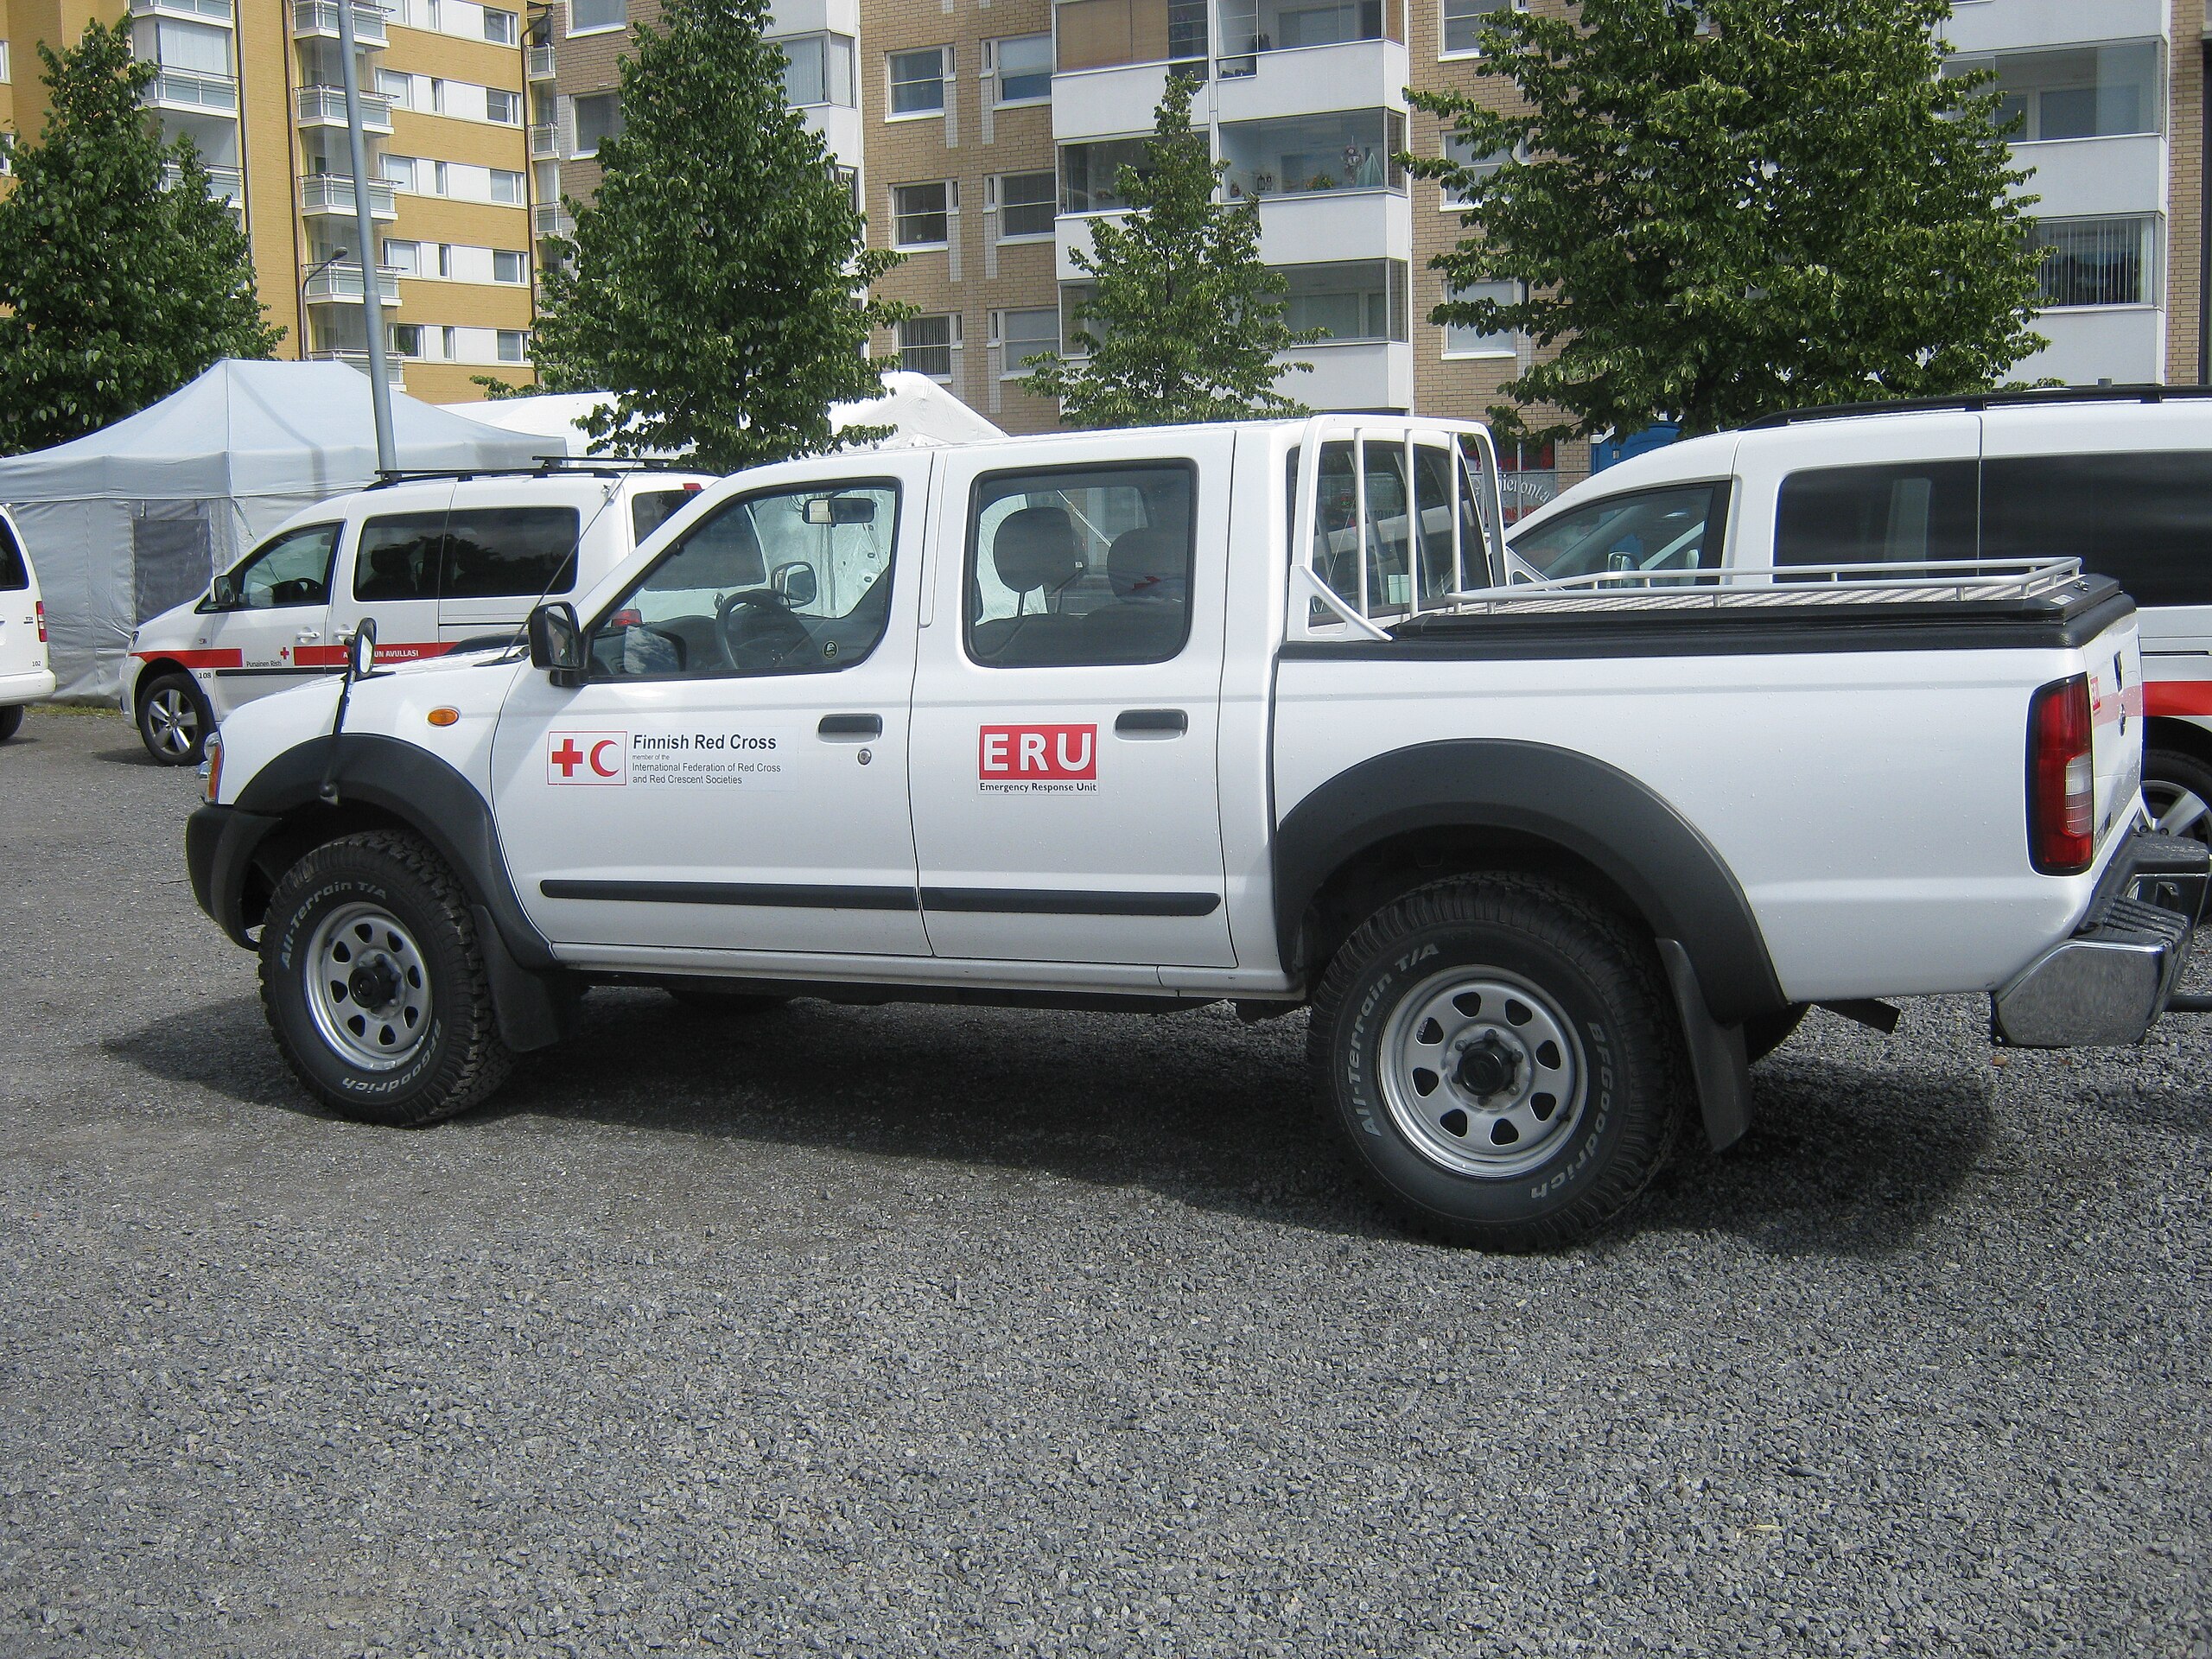 overdrive Diktatur sort File:Finnish Red Cross ERU vehicle.JPG - Wikimedia Commons